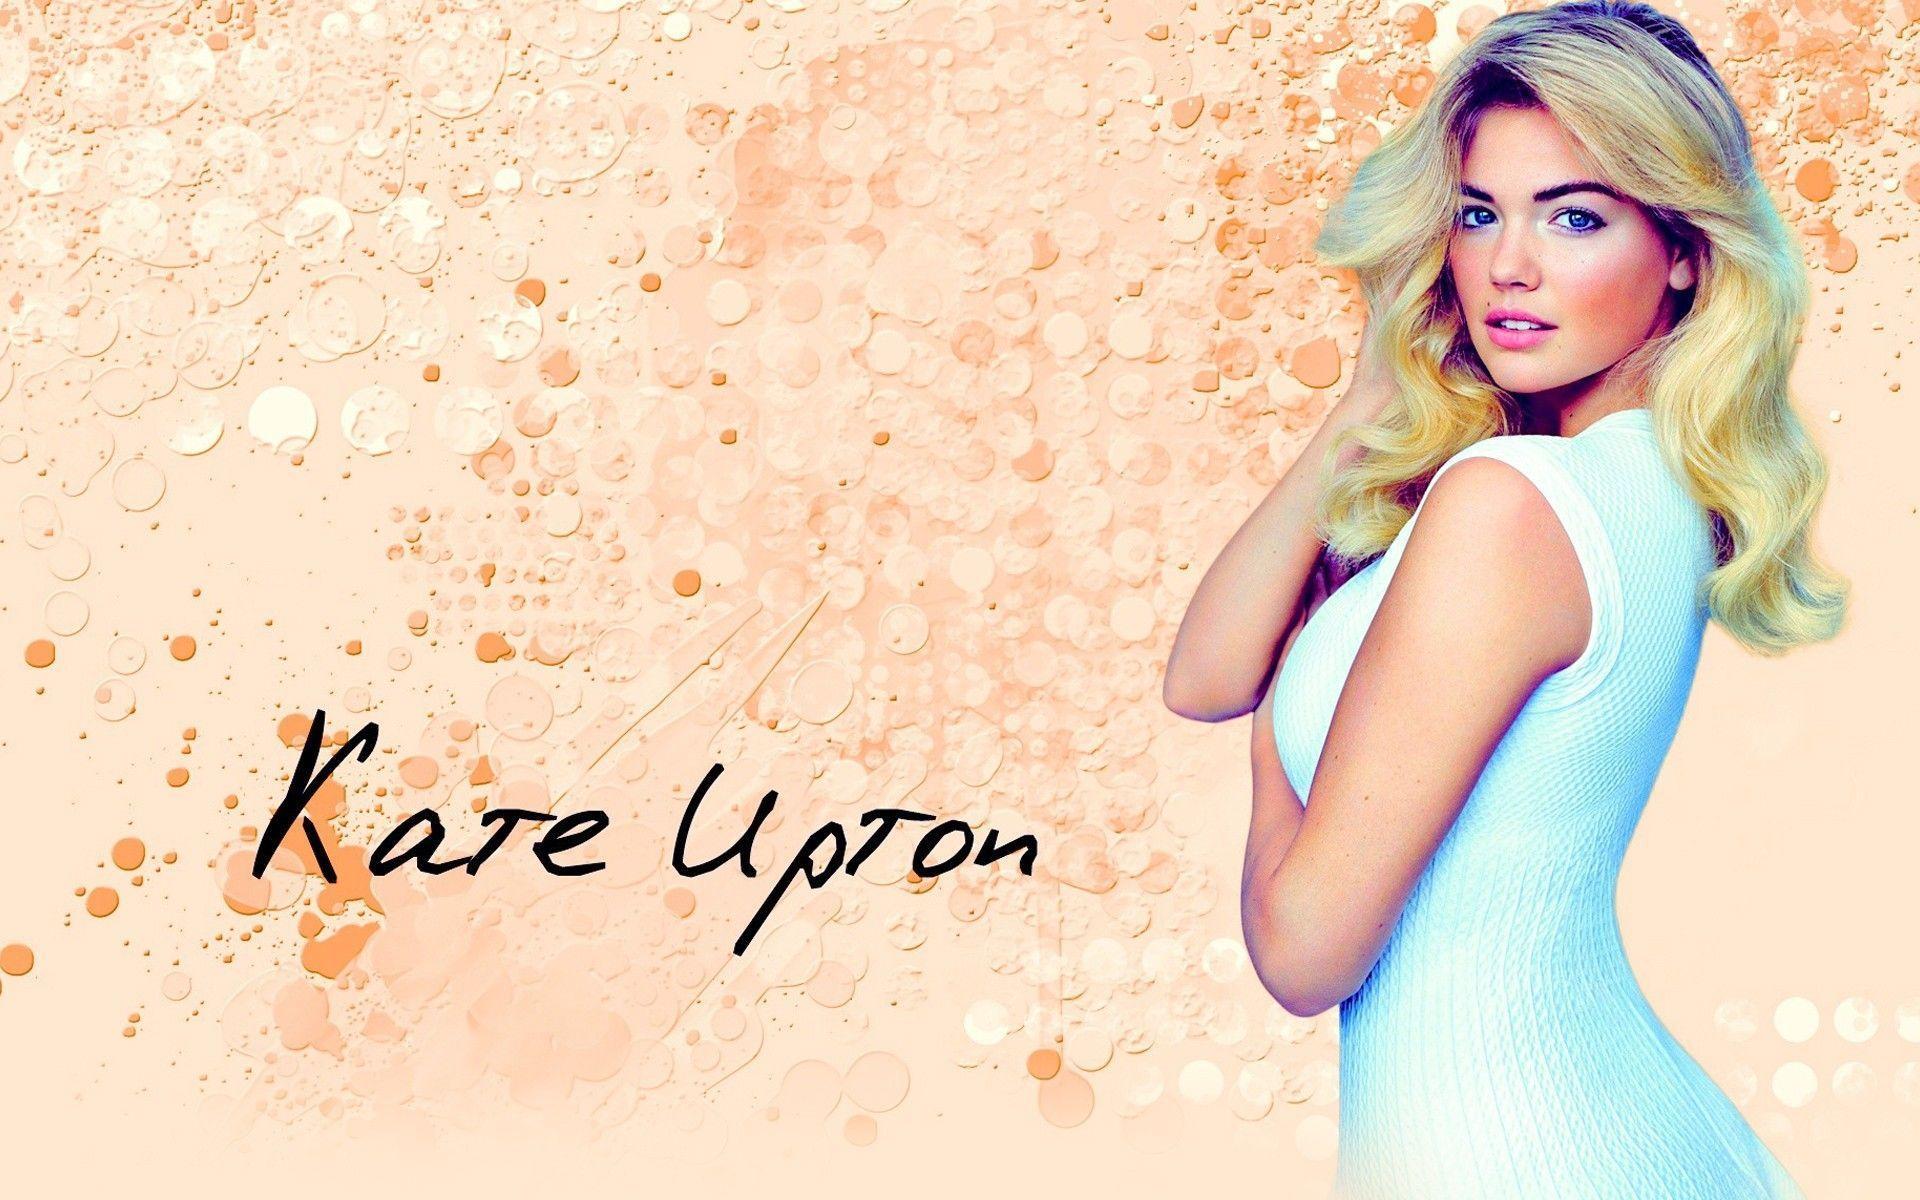 Kate Moss Playboy 2013. Free Download Wallpaper Desktop Background